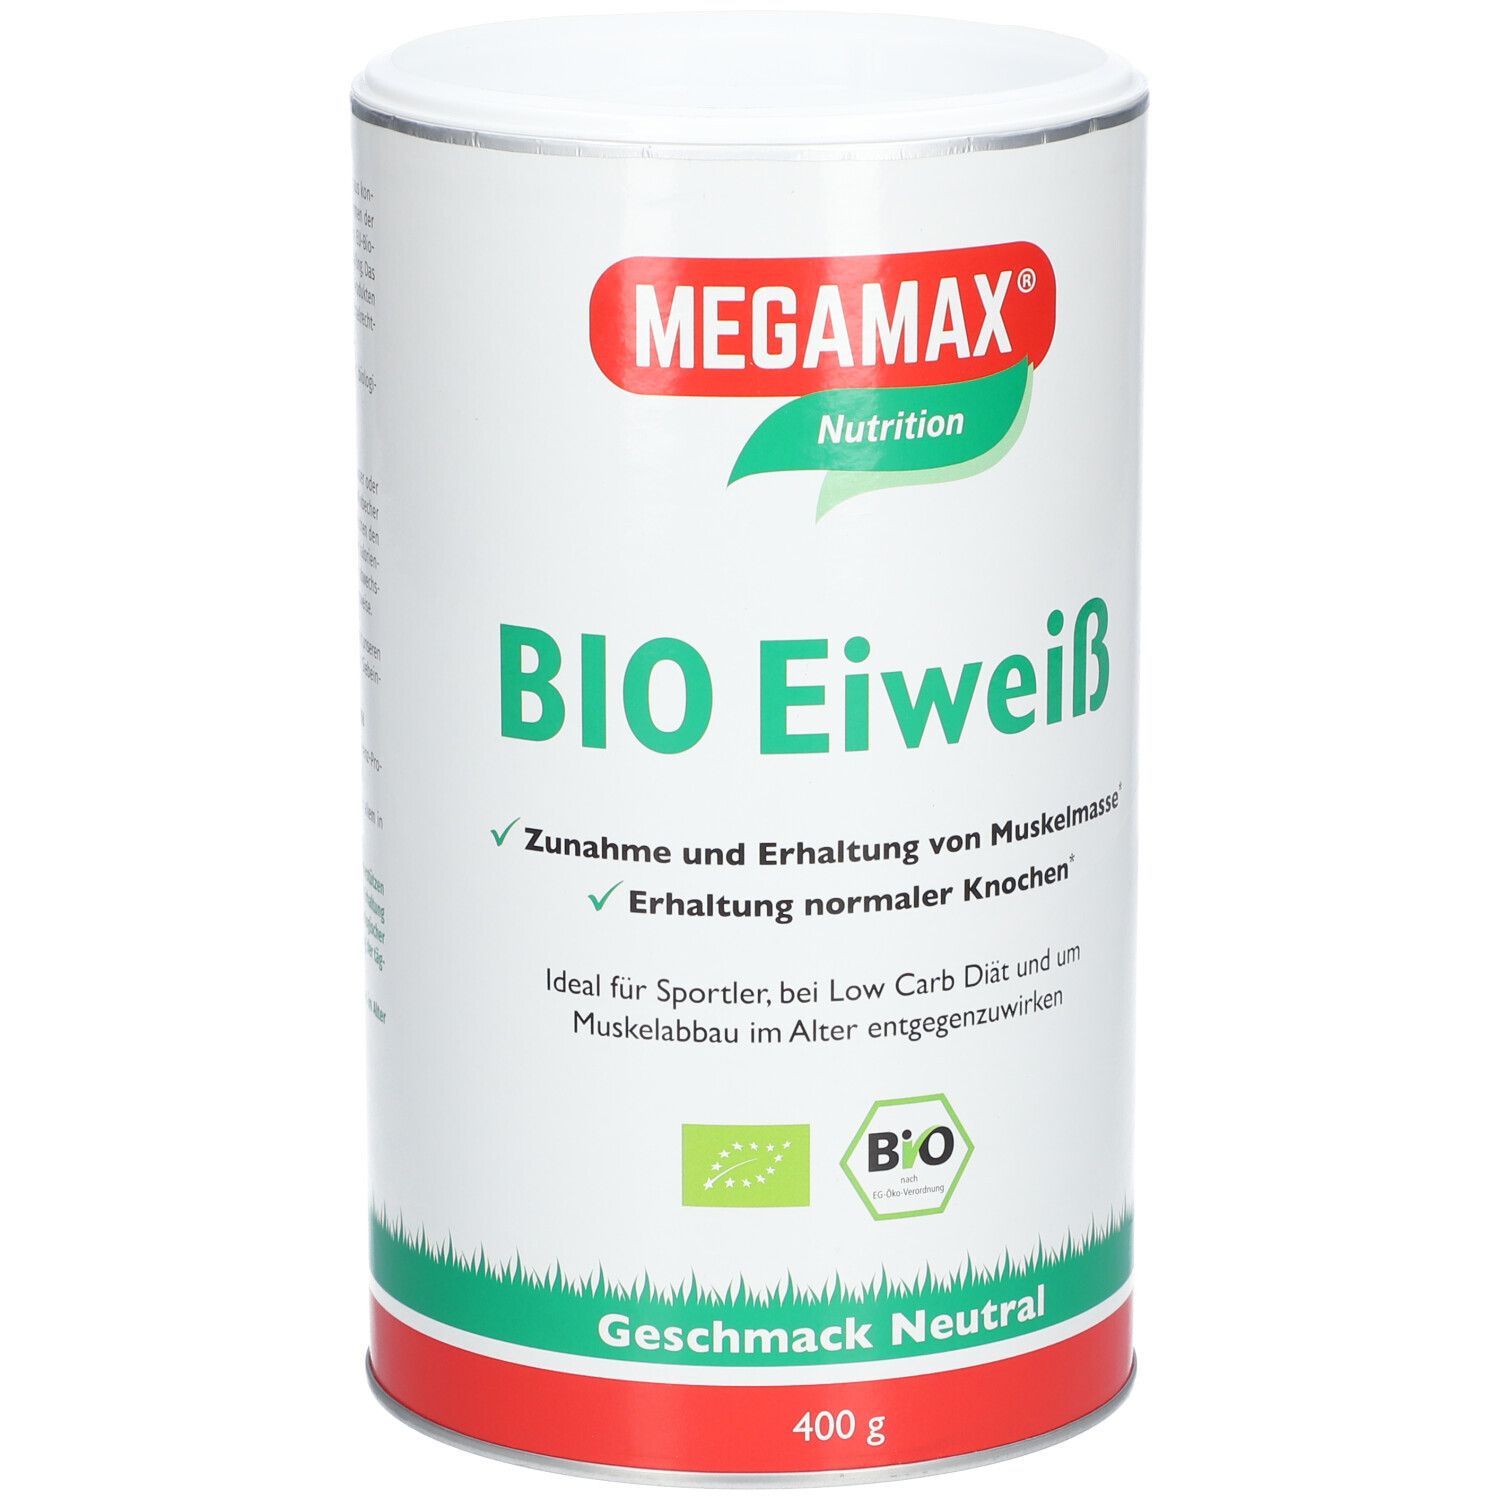 MEGAMAX® Nutrition BIO Eiweiß Geschmack-Neutral